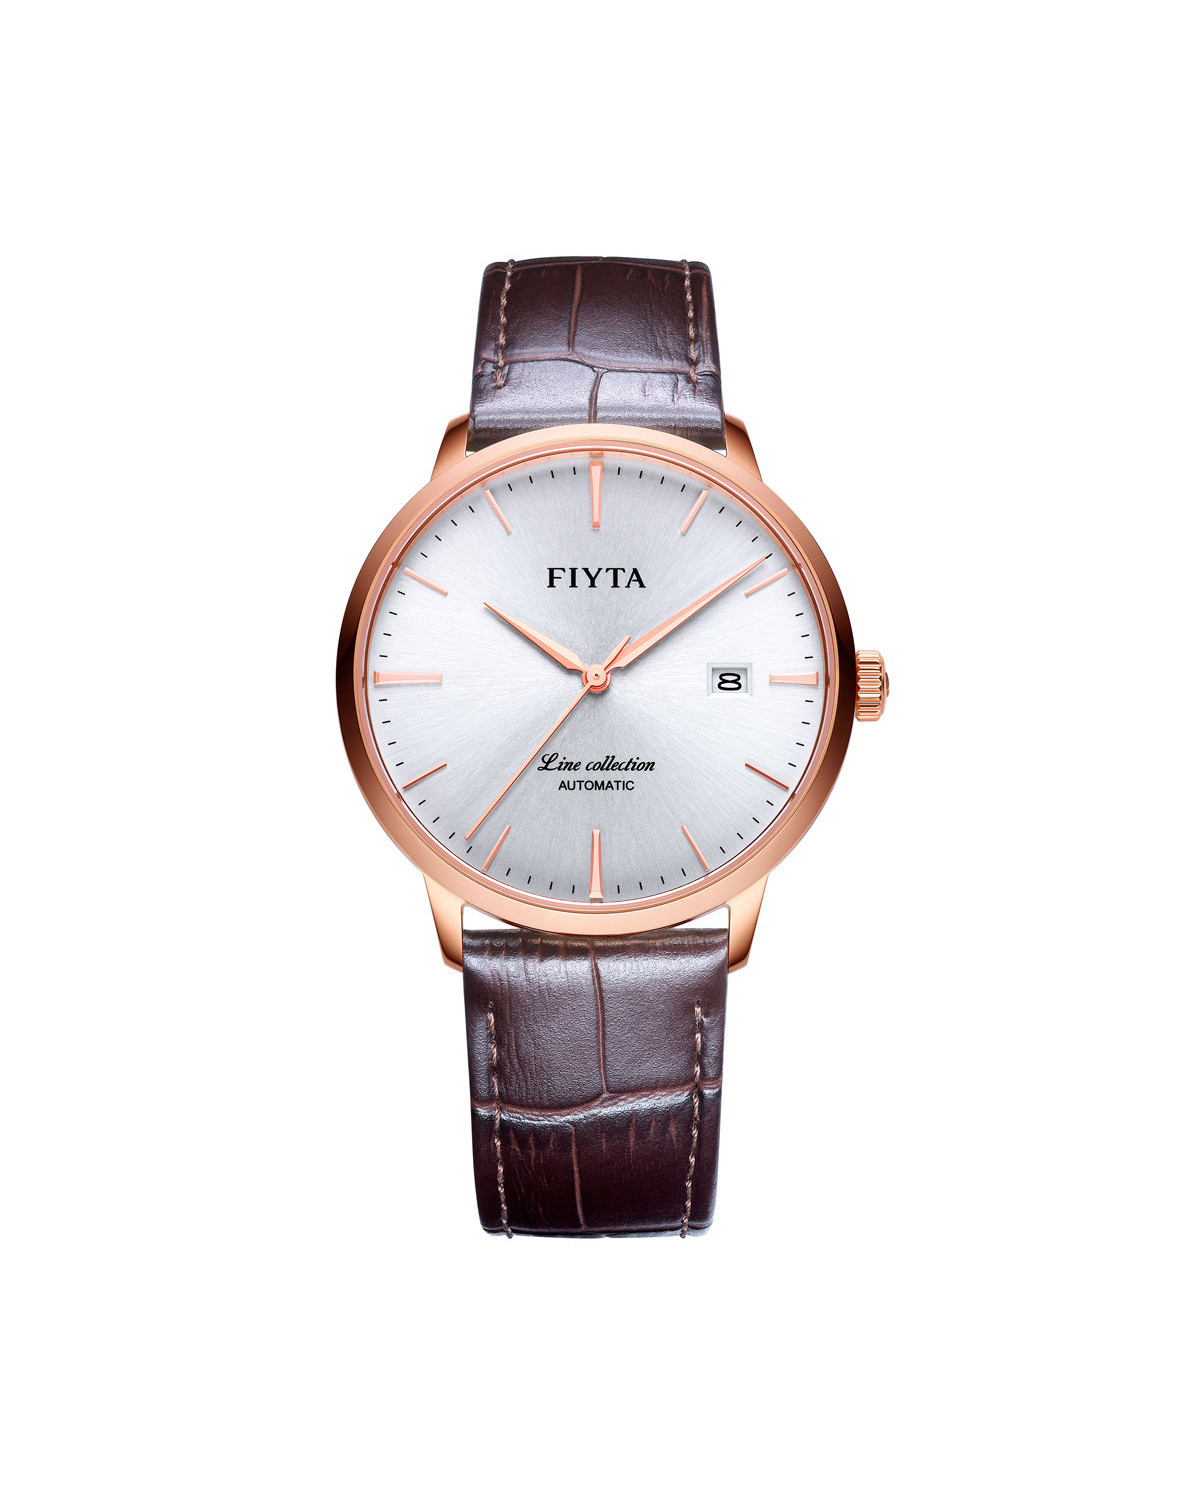 Fiyta men's watch